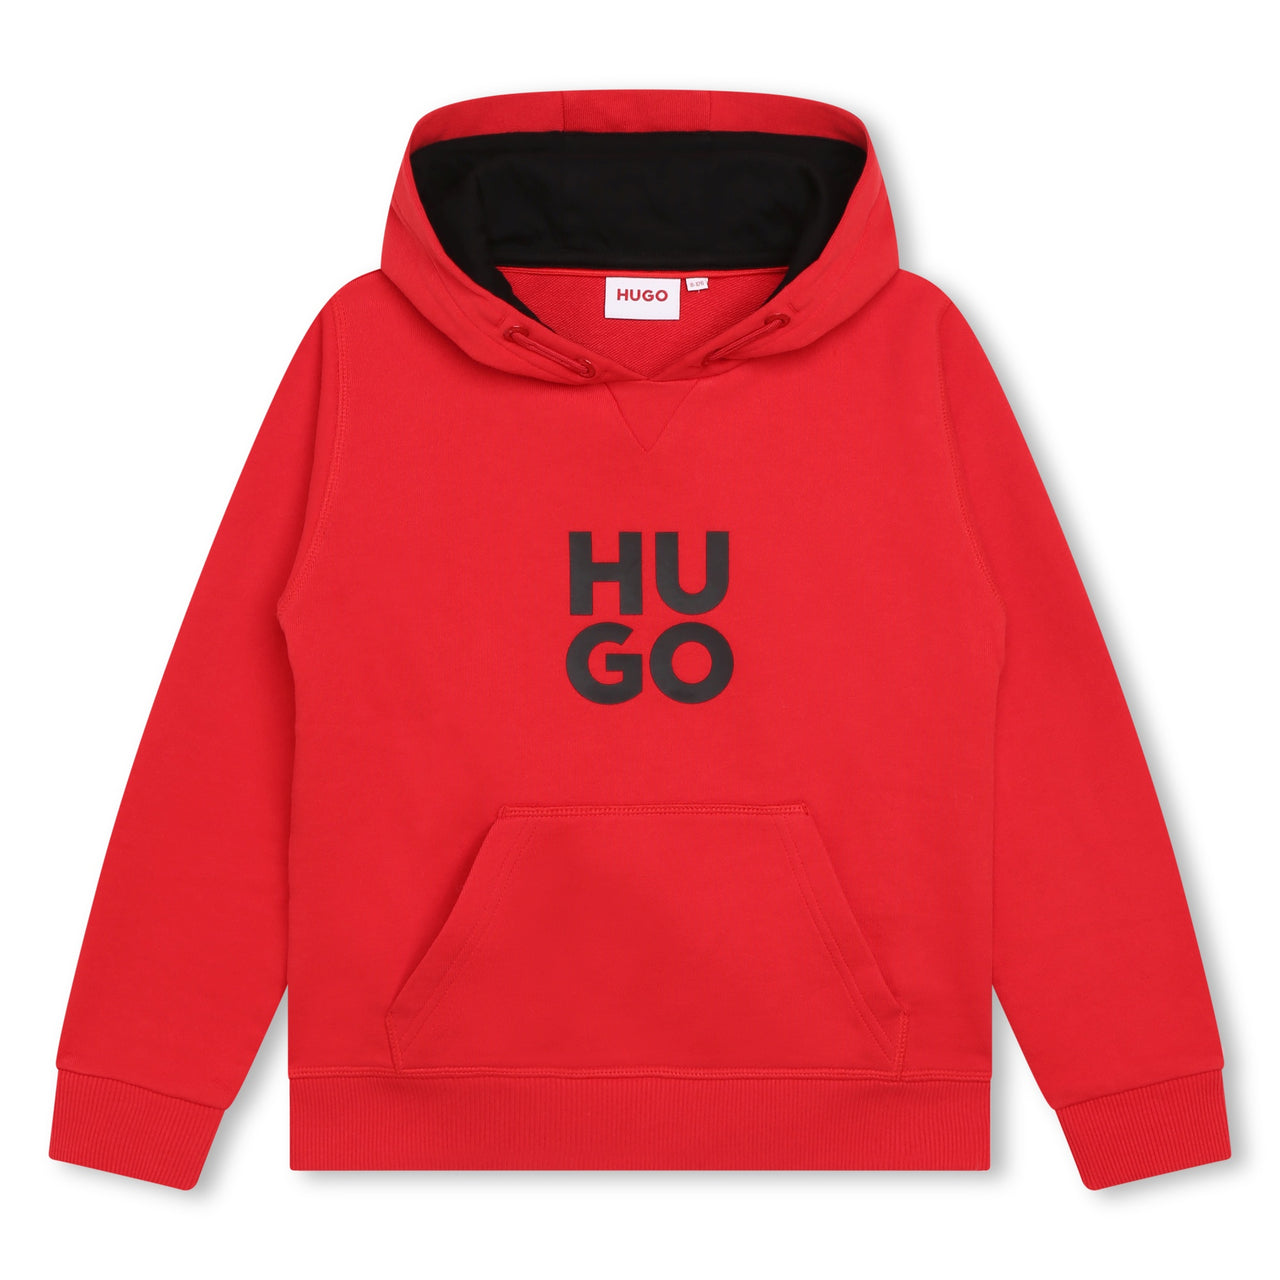 Sudadera o sweter para niño y teens roja HUGO